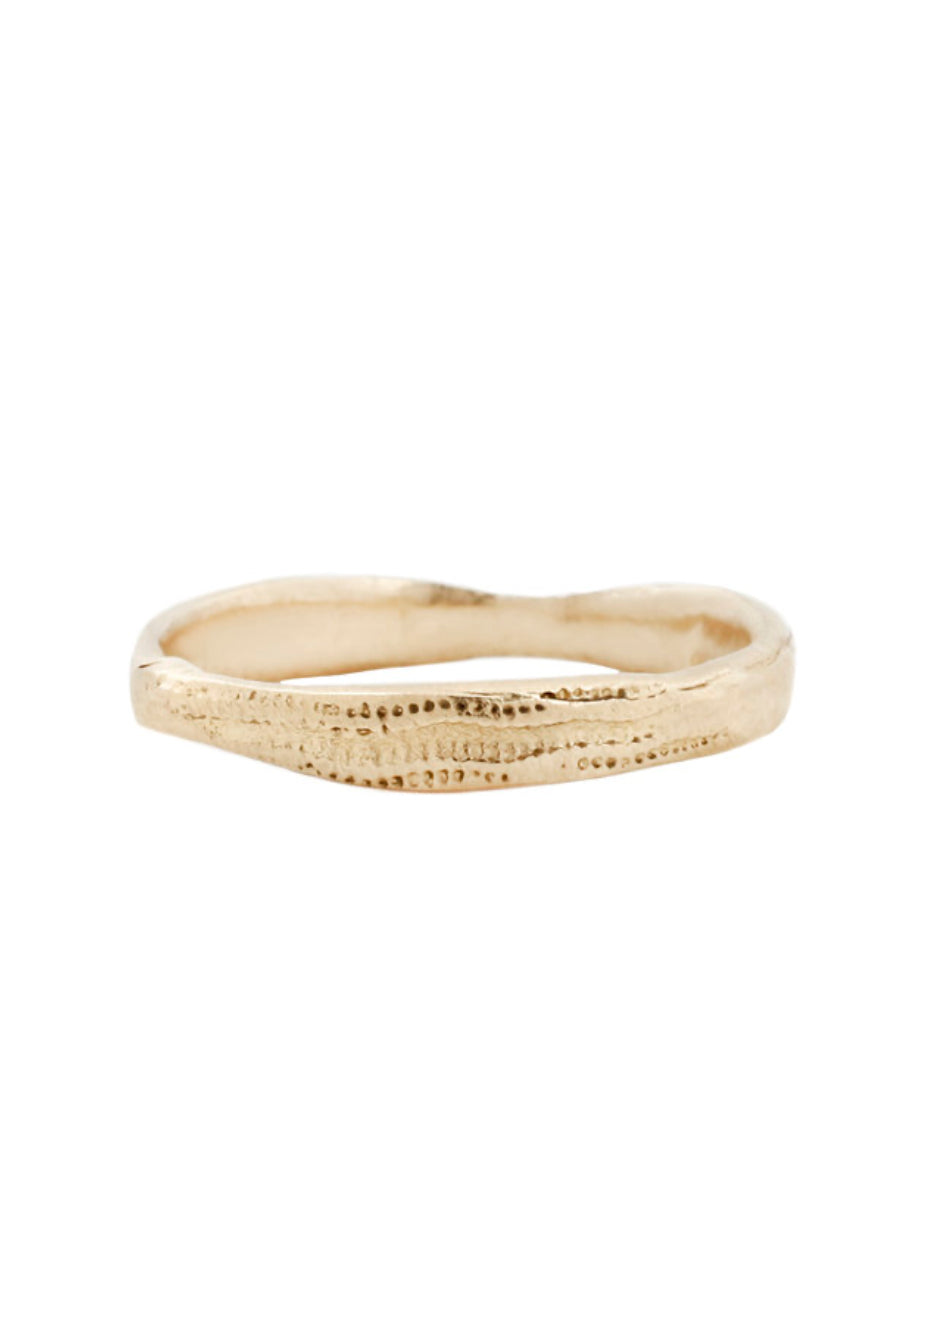 14k Gold Sea Urchin Ring in Size 6 | Lauren Wolf – NOMAD